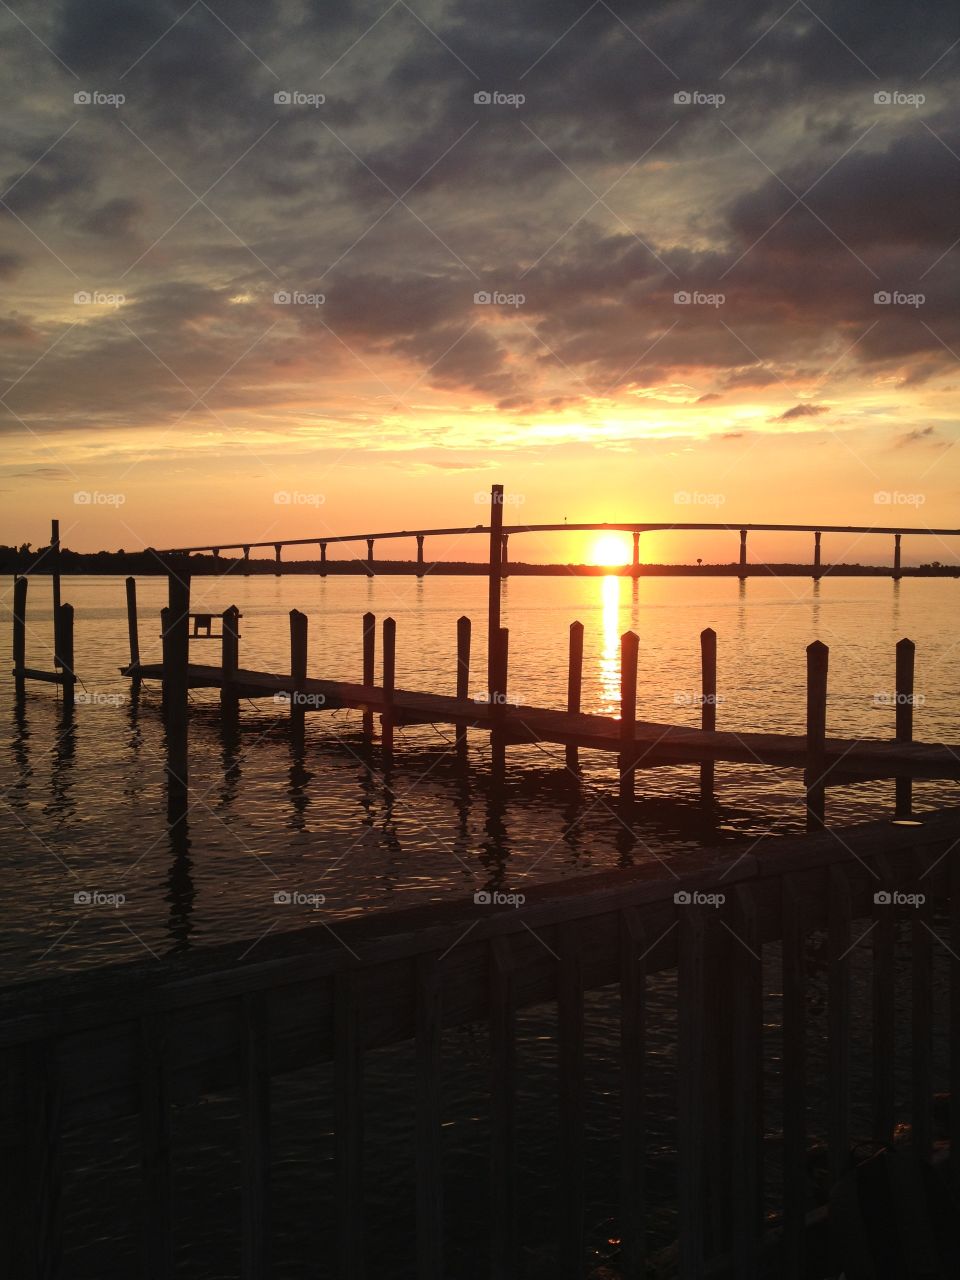 Sunset. Sunset and docks in Solomon's island 